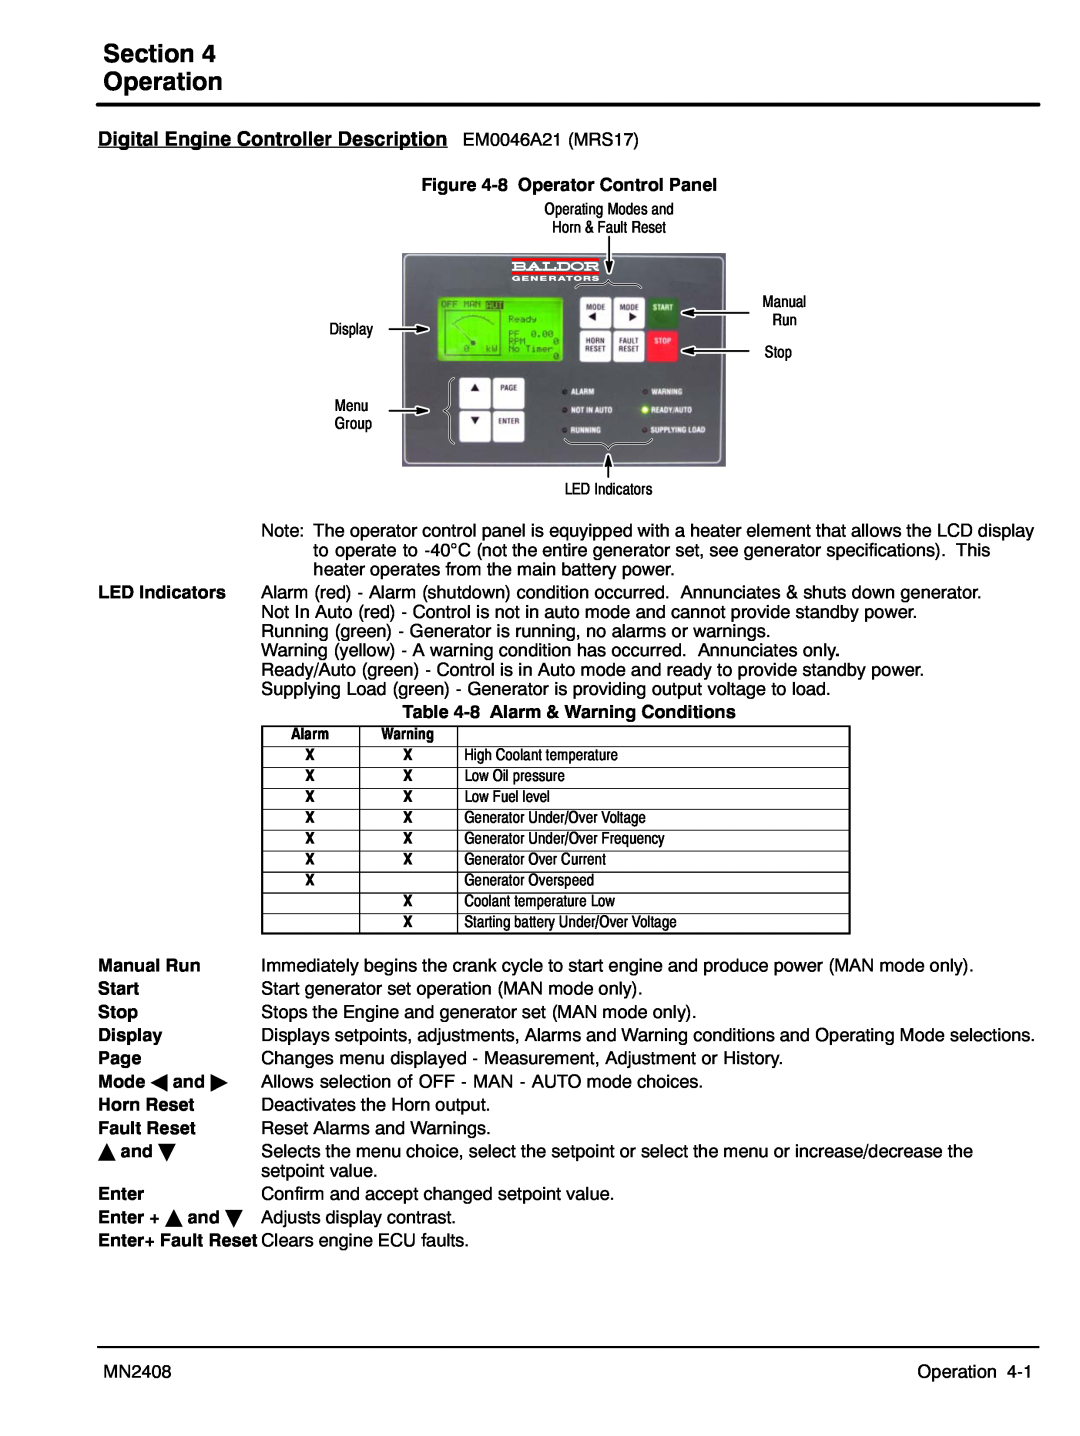 Baldor GLC15 Digital Engine Controller Description EM0046A21 MRS17, ‐8 Operator Control Panel, Manual Run, Start, Stop 